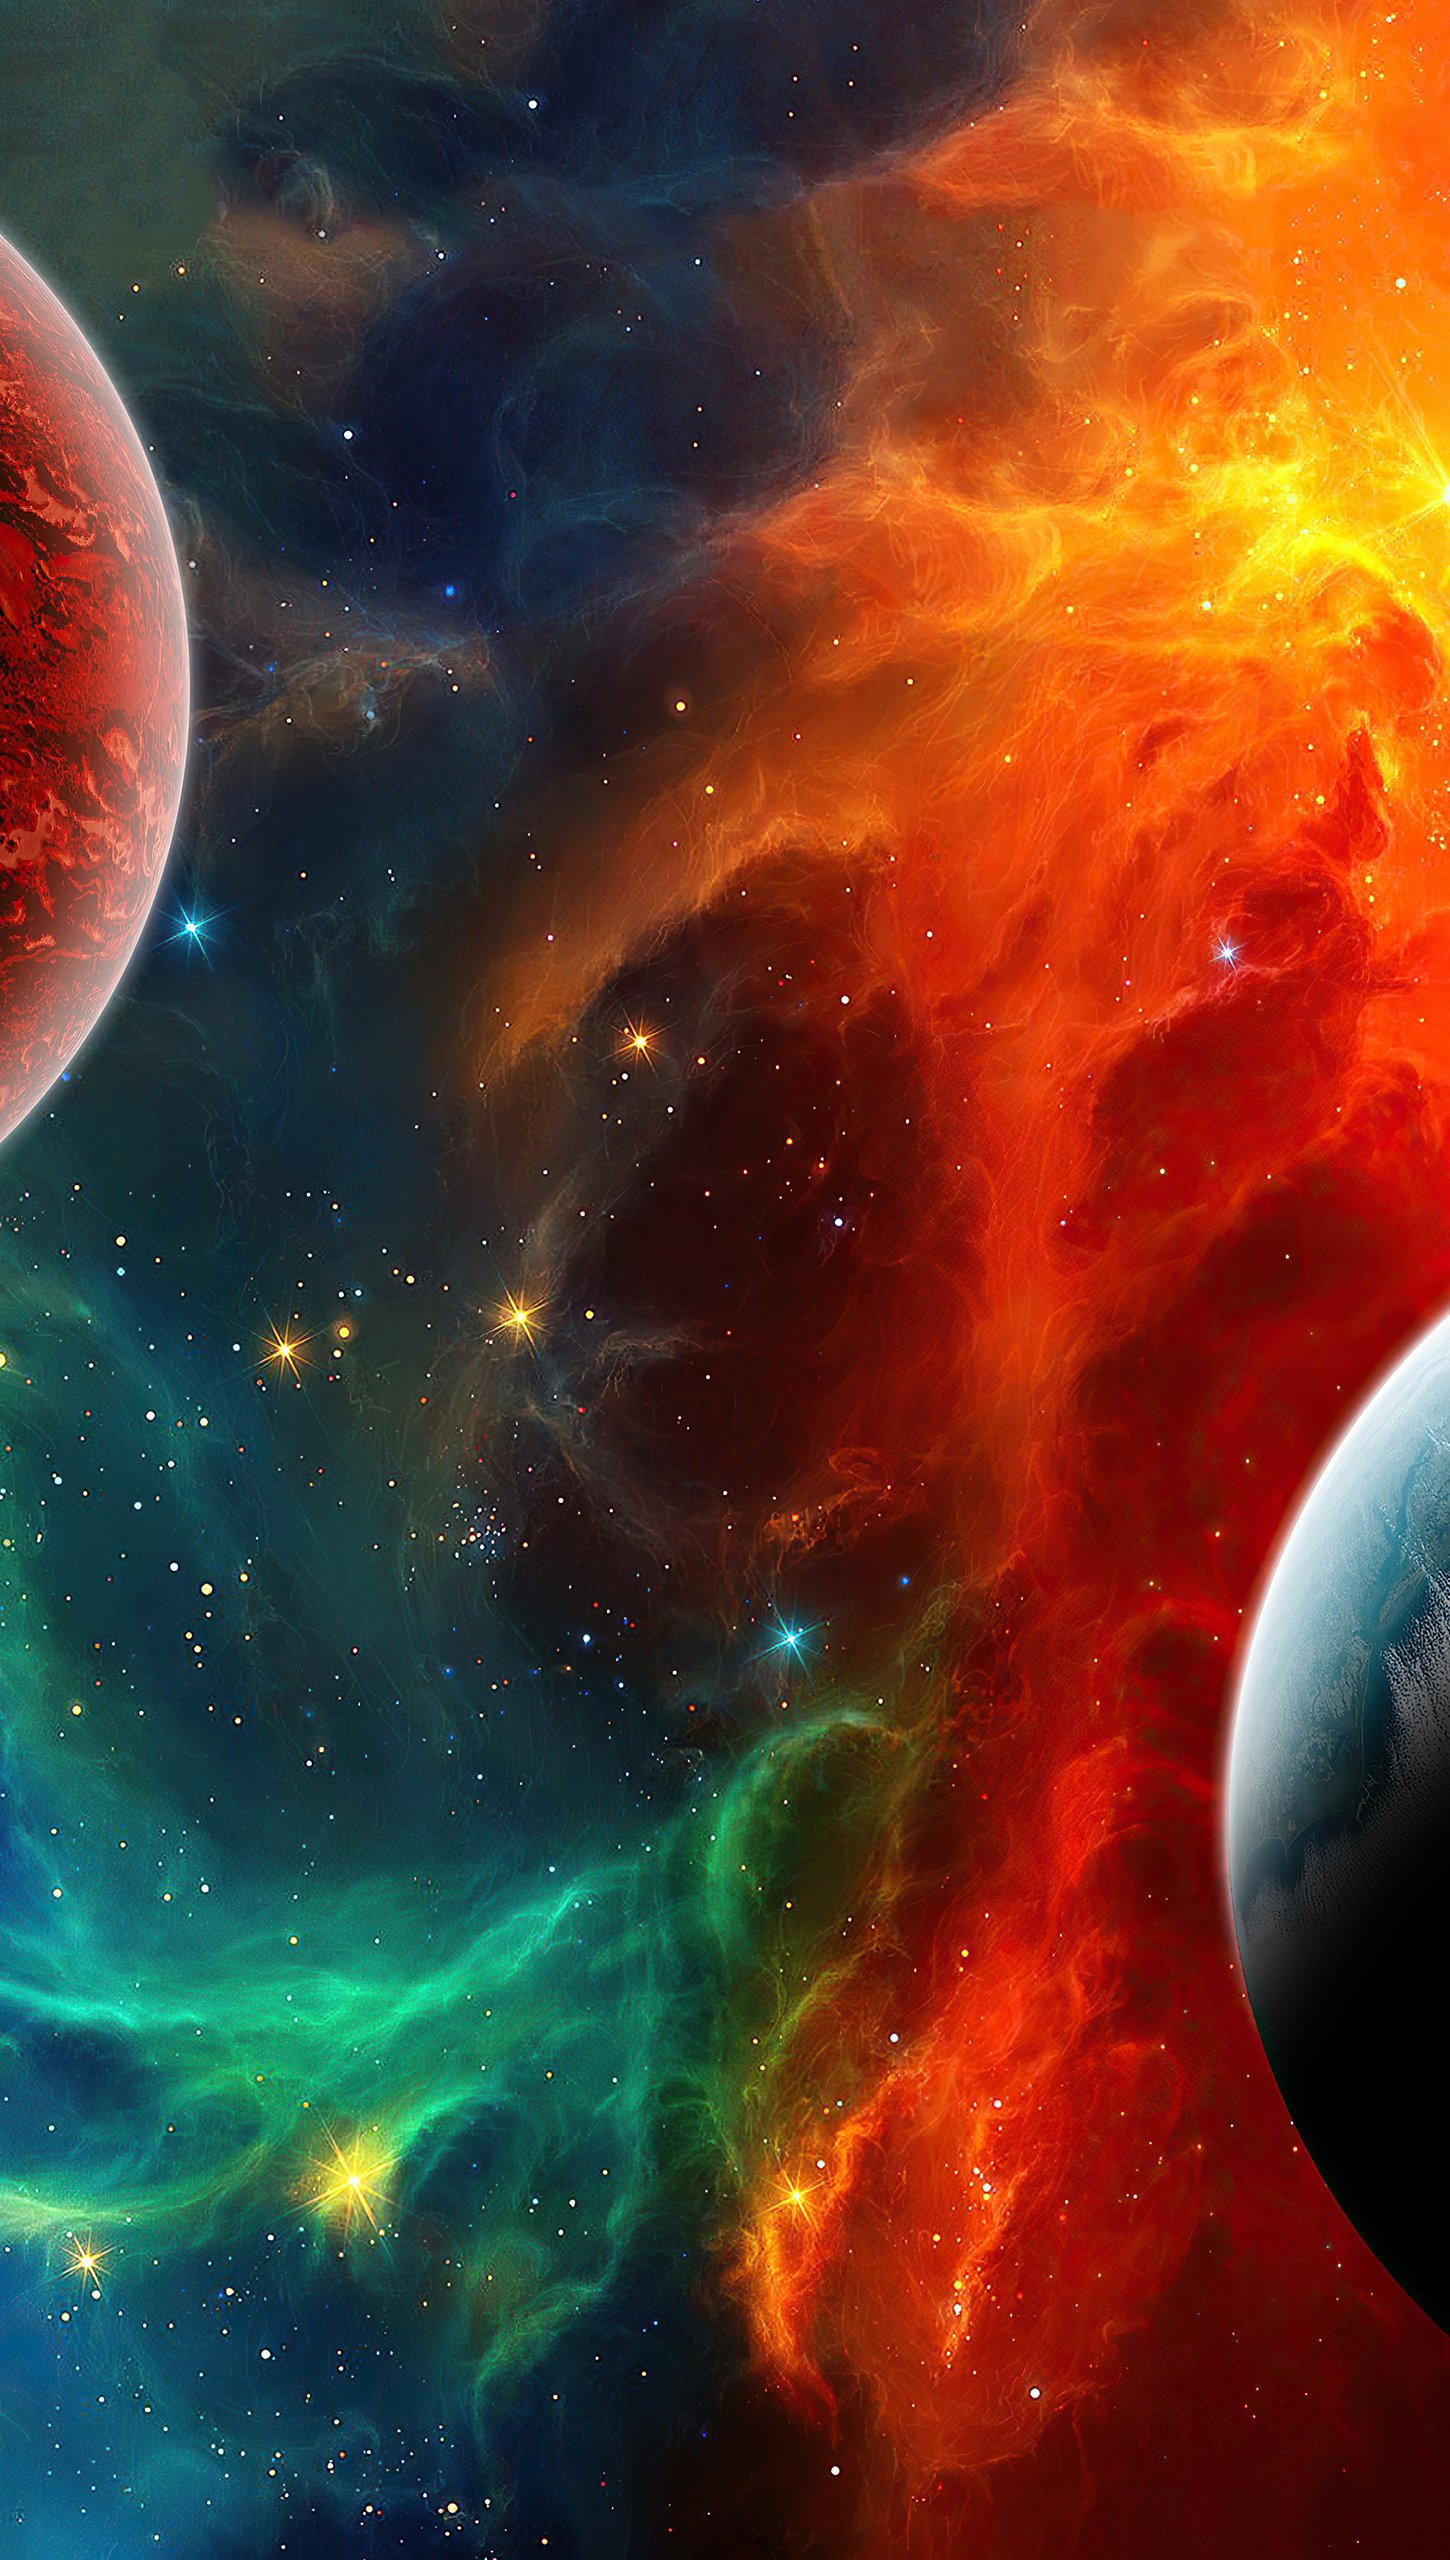 Colorful Nebula in space Wallpaper 4k Ultra HD